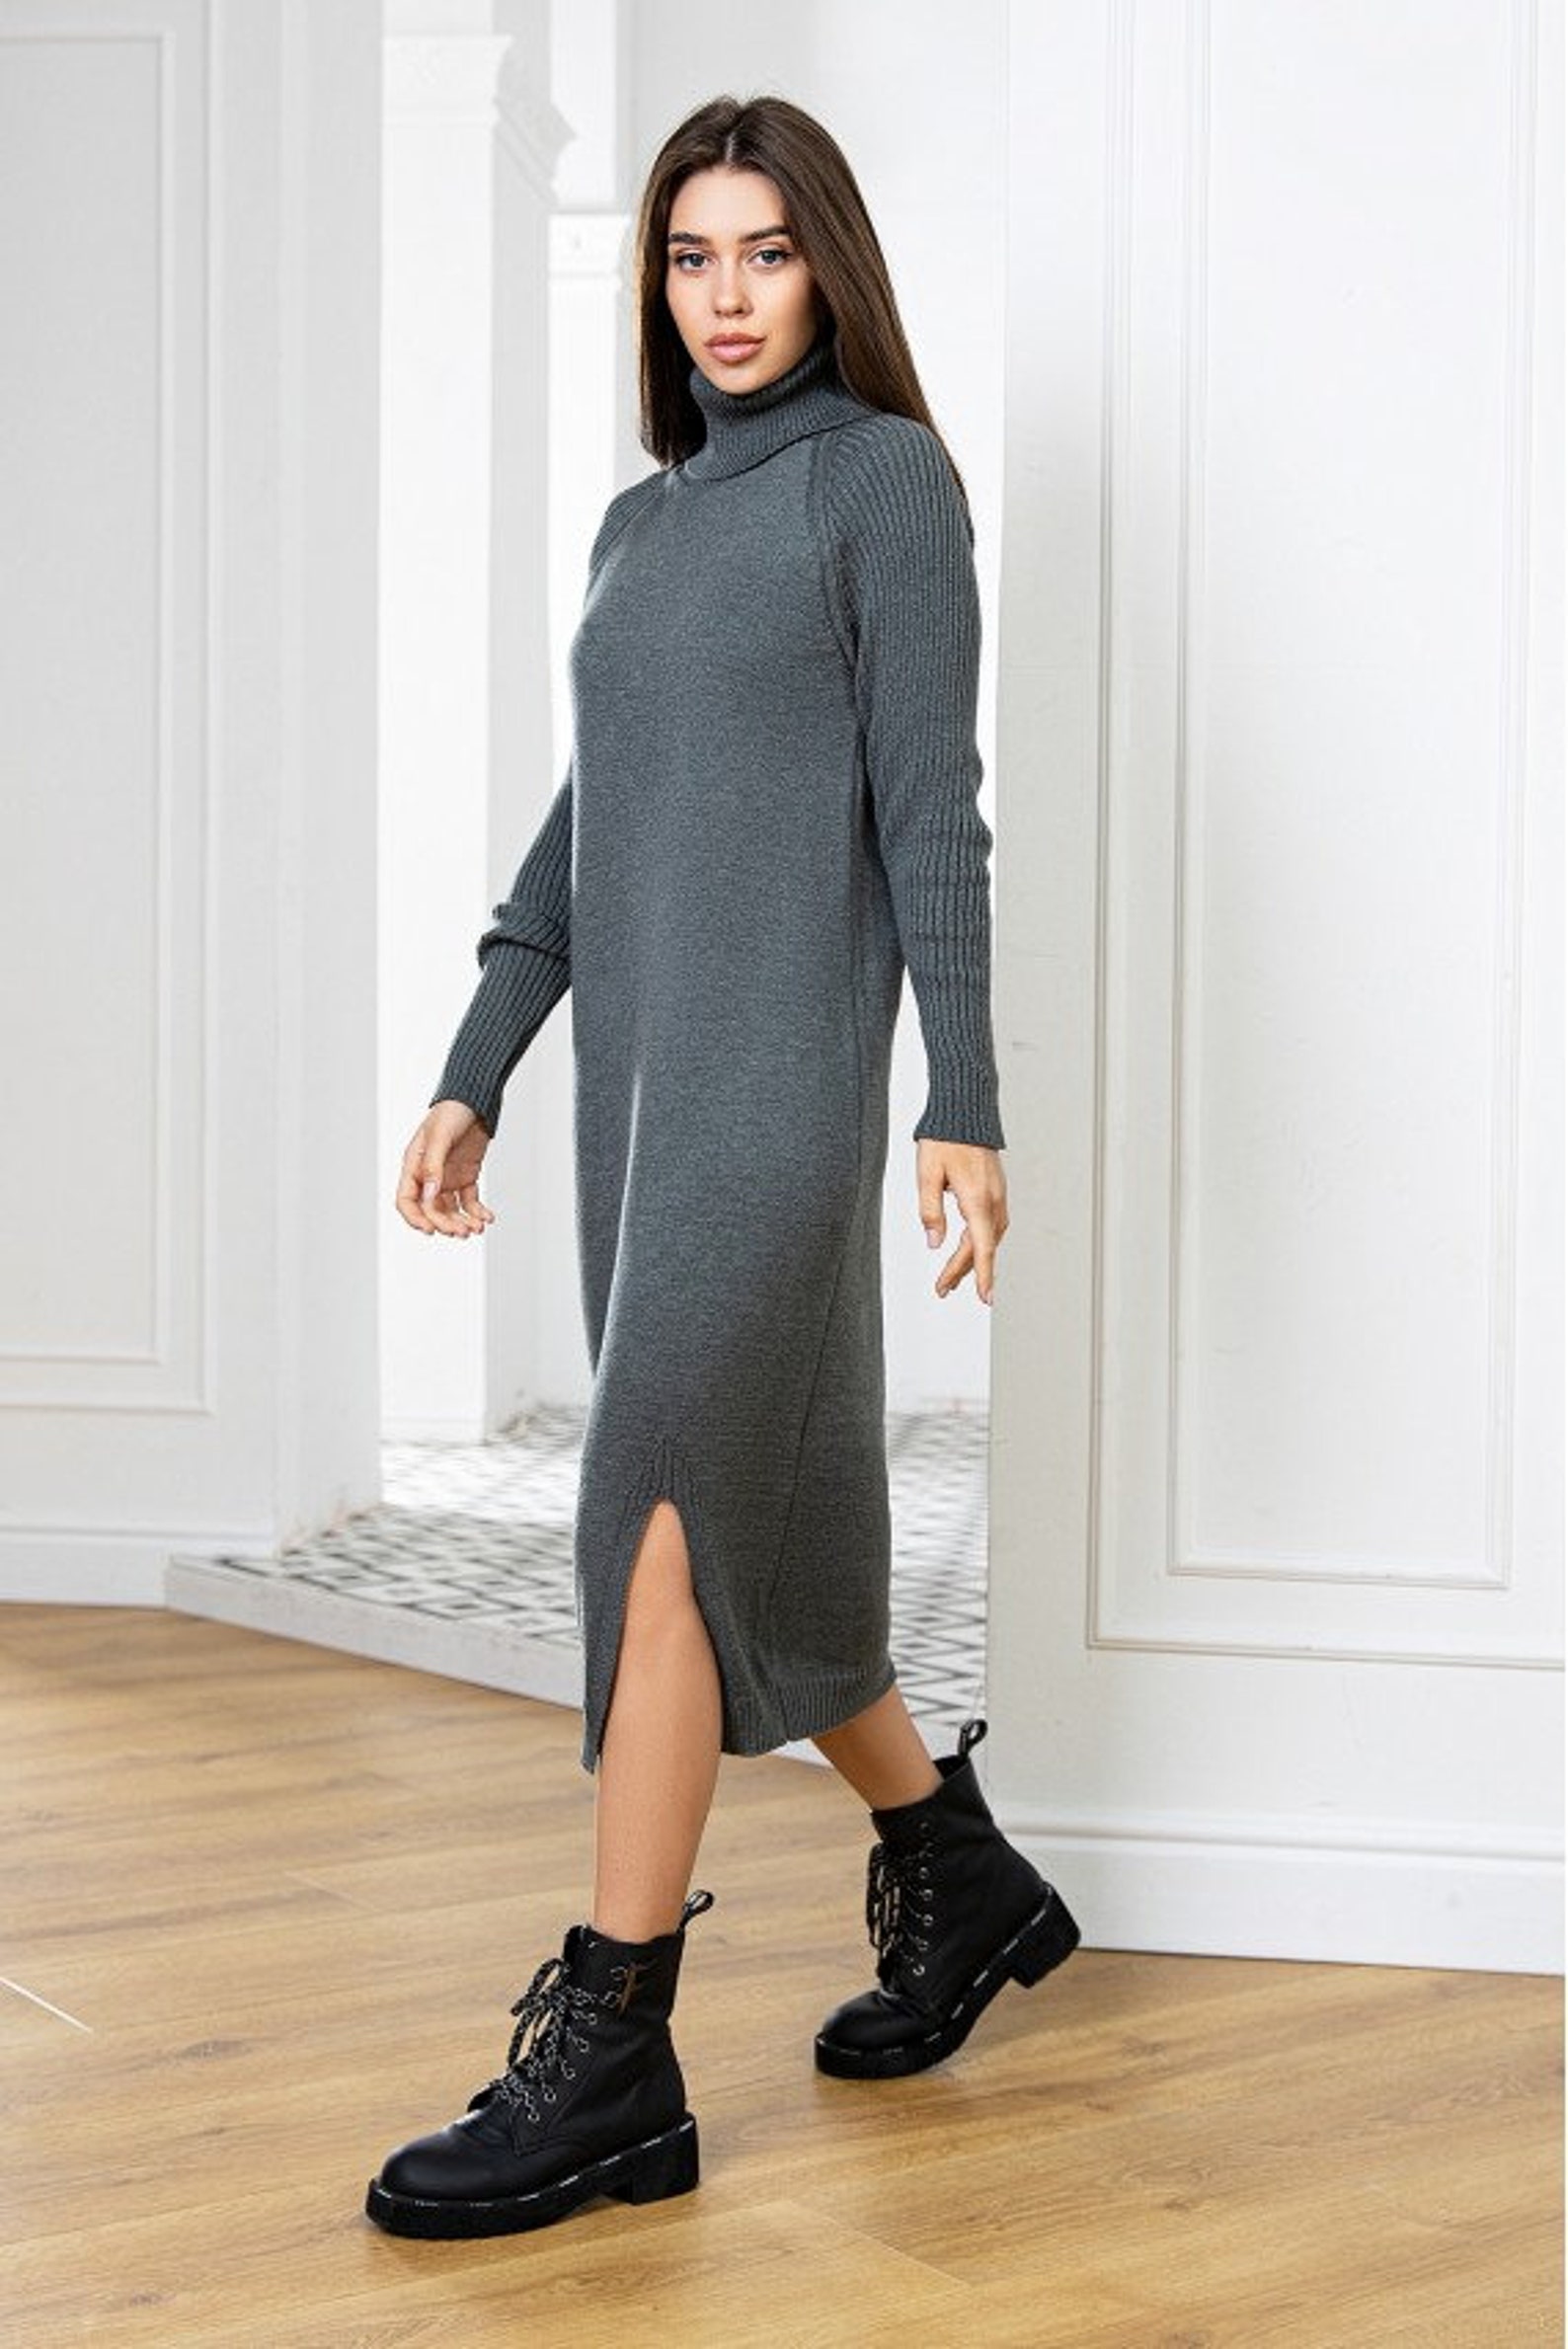 Knitted Dress midi office dresset Dress Cotton sweater | Etsy